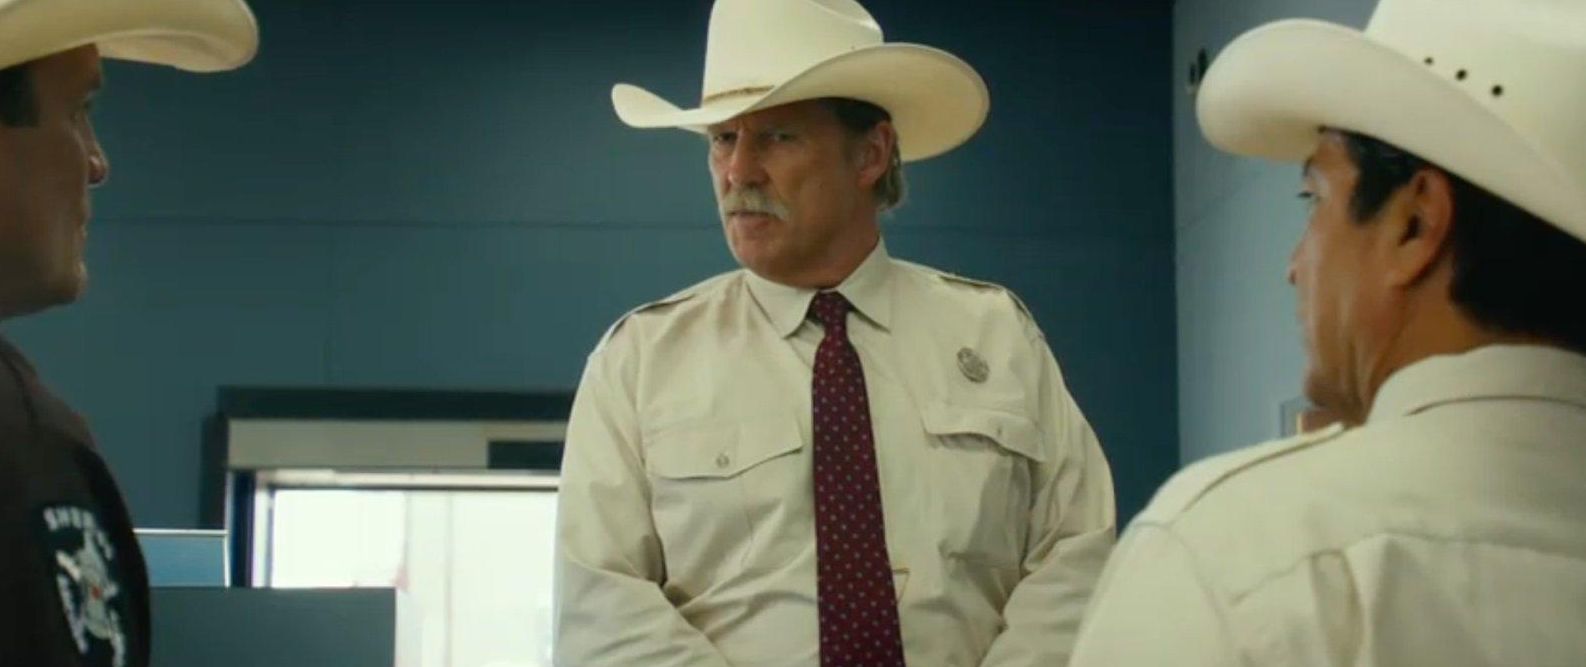 Jeff Bridges as Marcus Hamilton, Texas Ranger